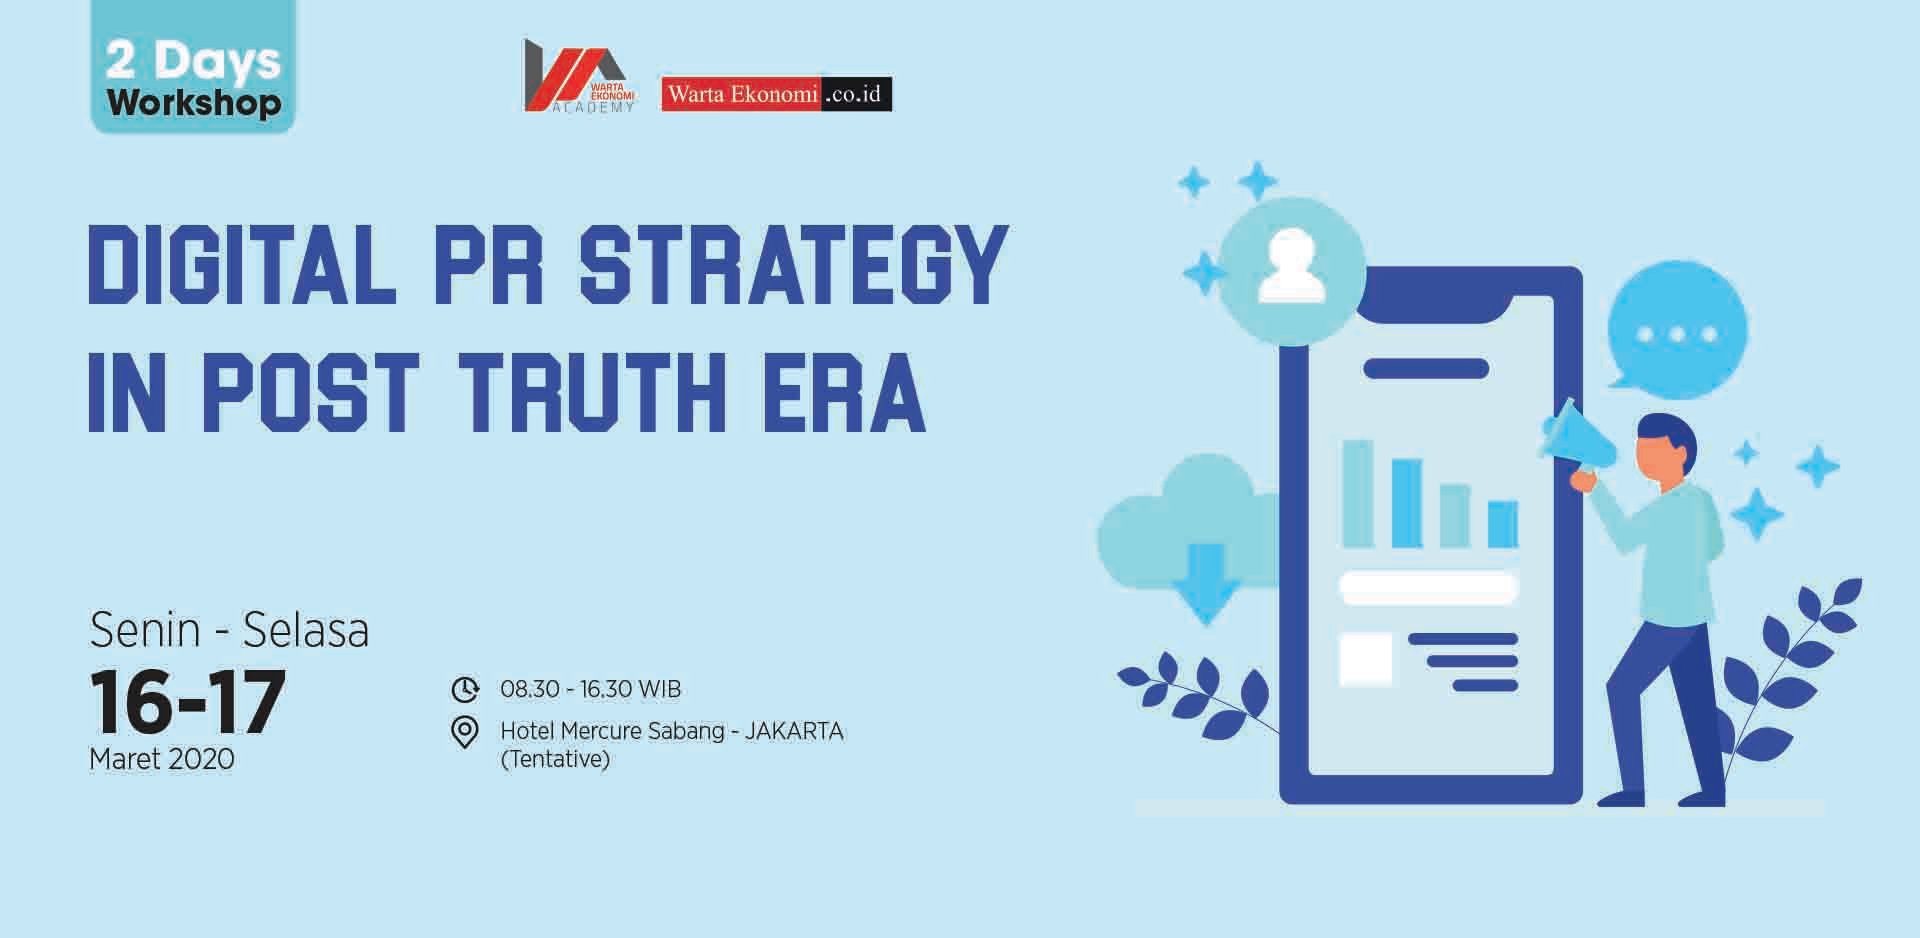 Digital PR Strategy in Post Truth Era